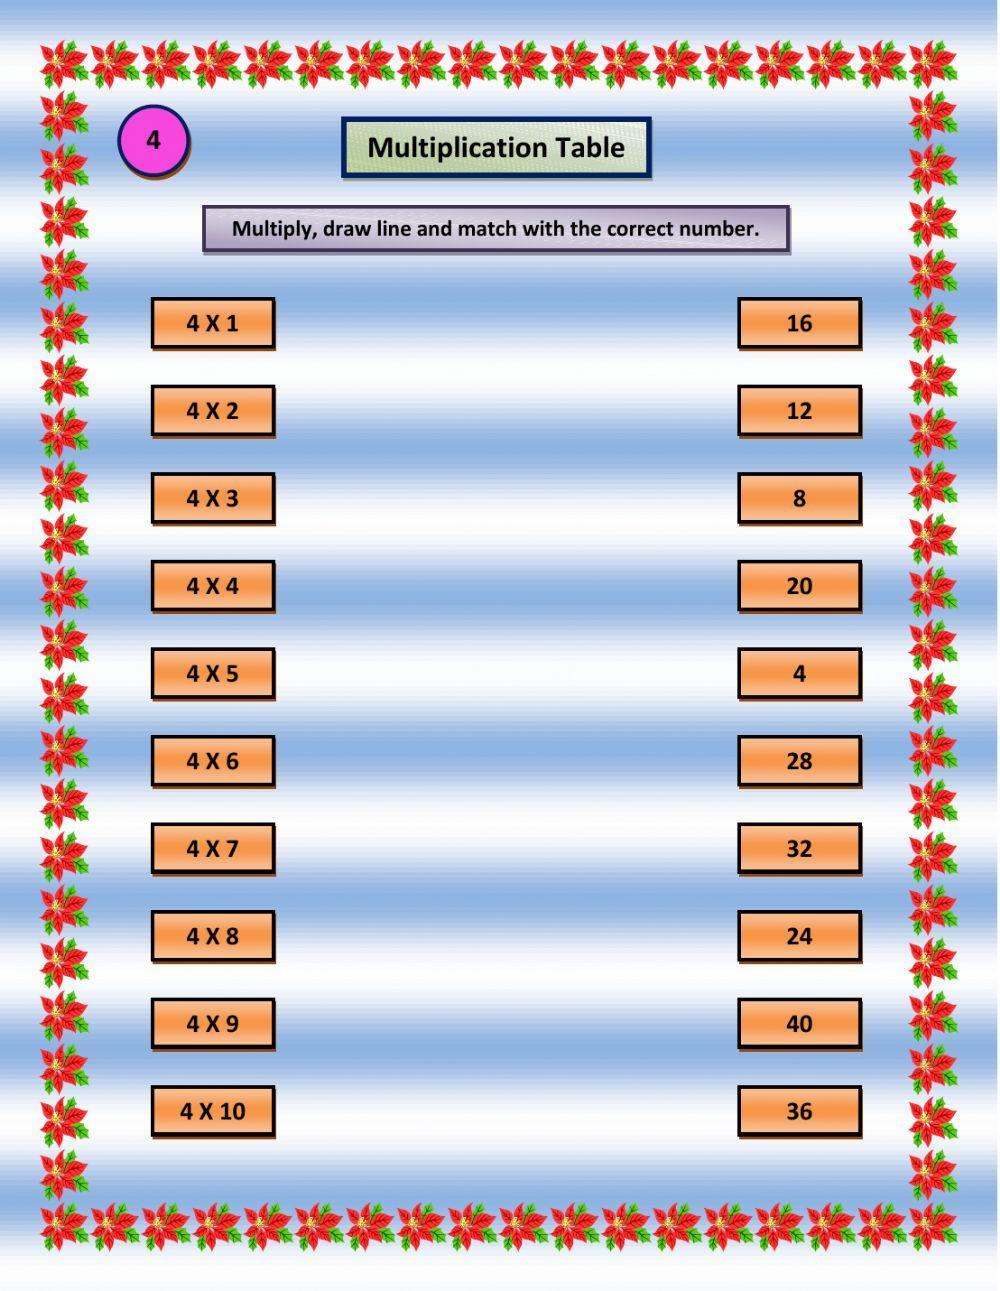 Multiplication Table : 4